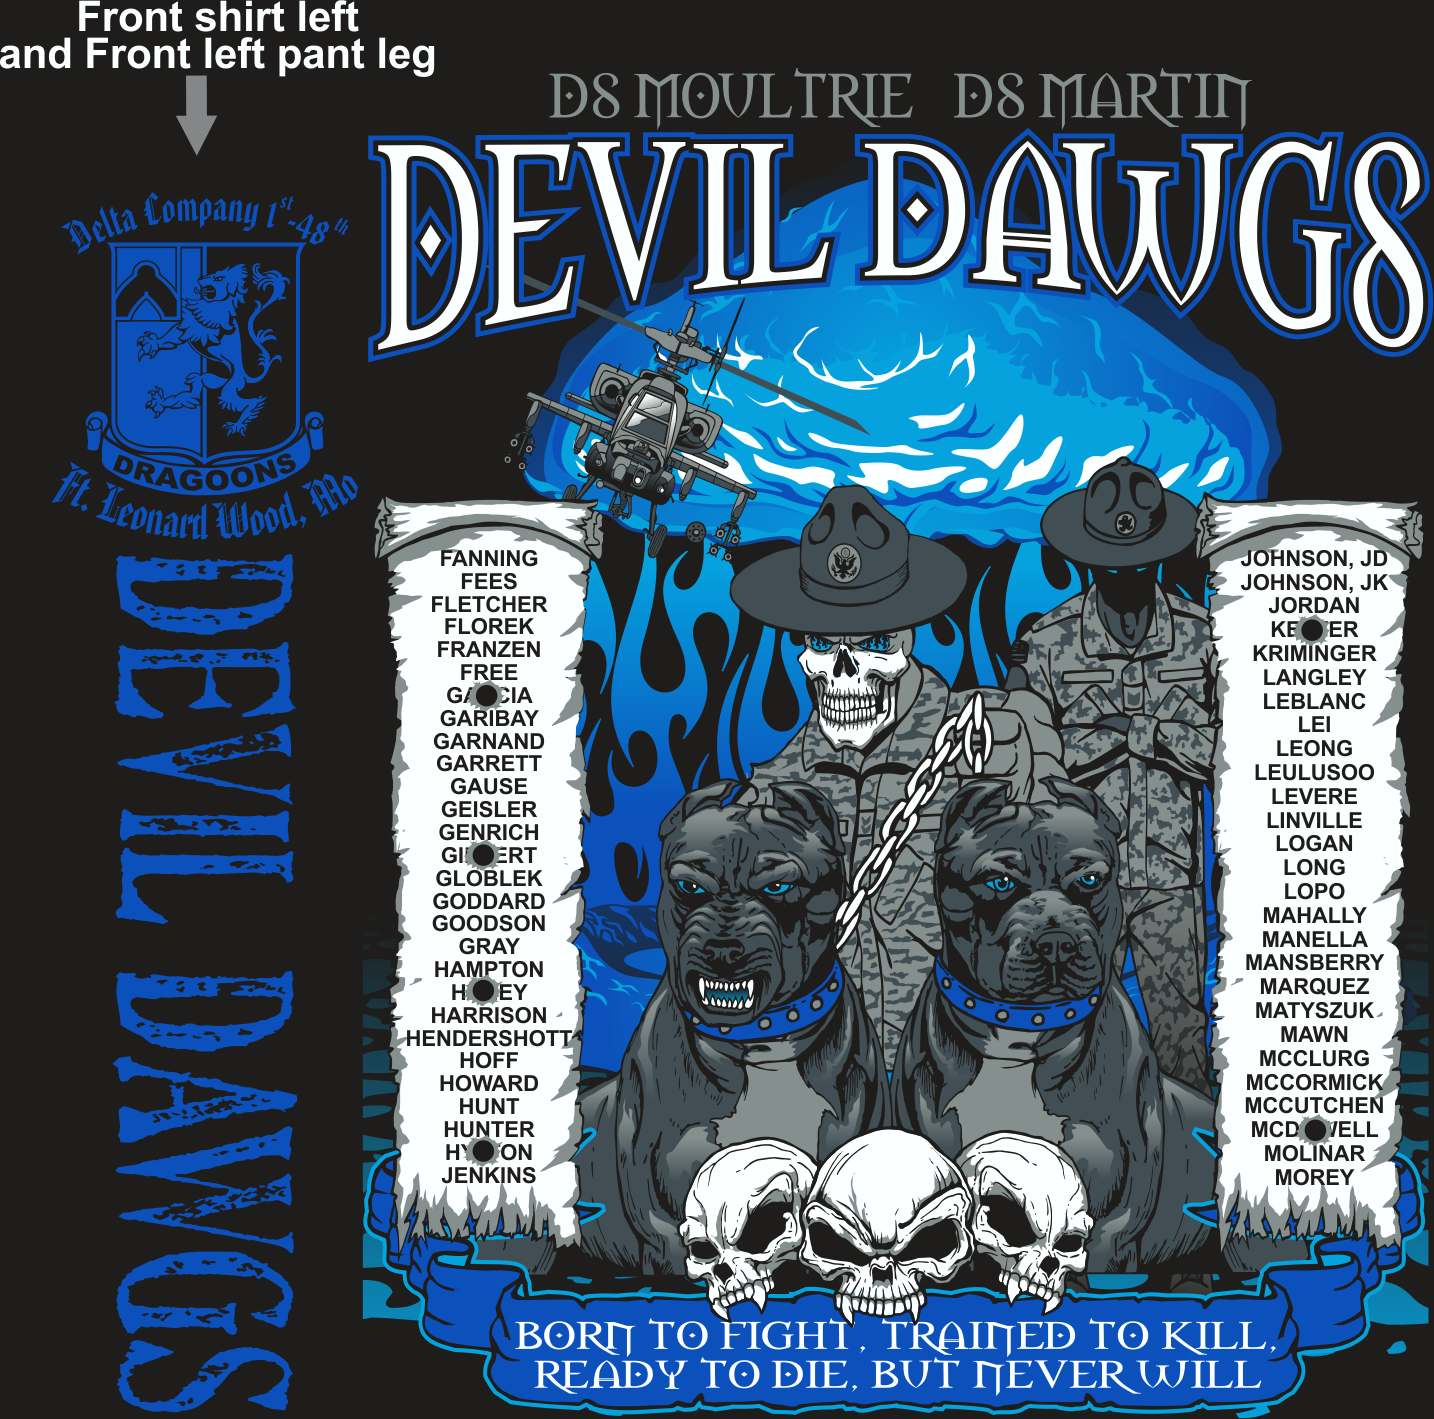 DELTA 1-48 DEVIL DAWGS digital*